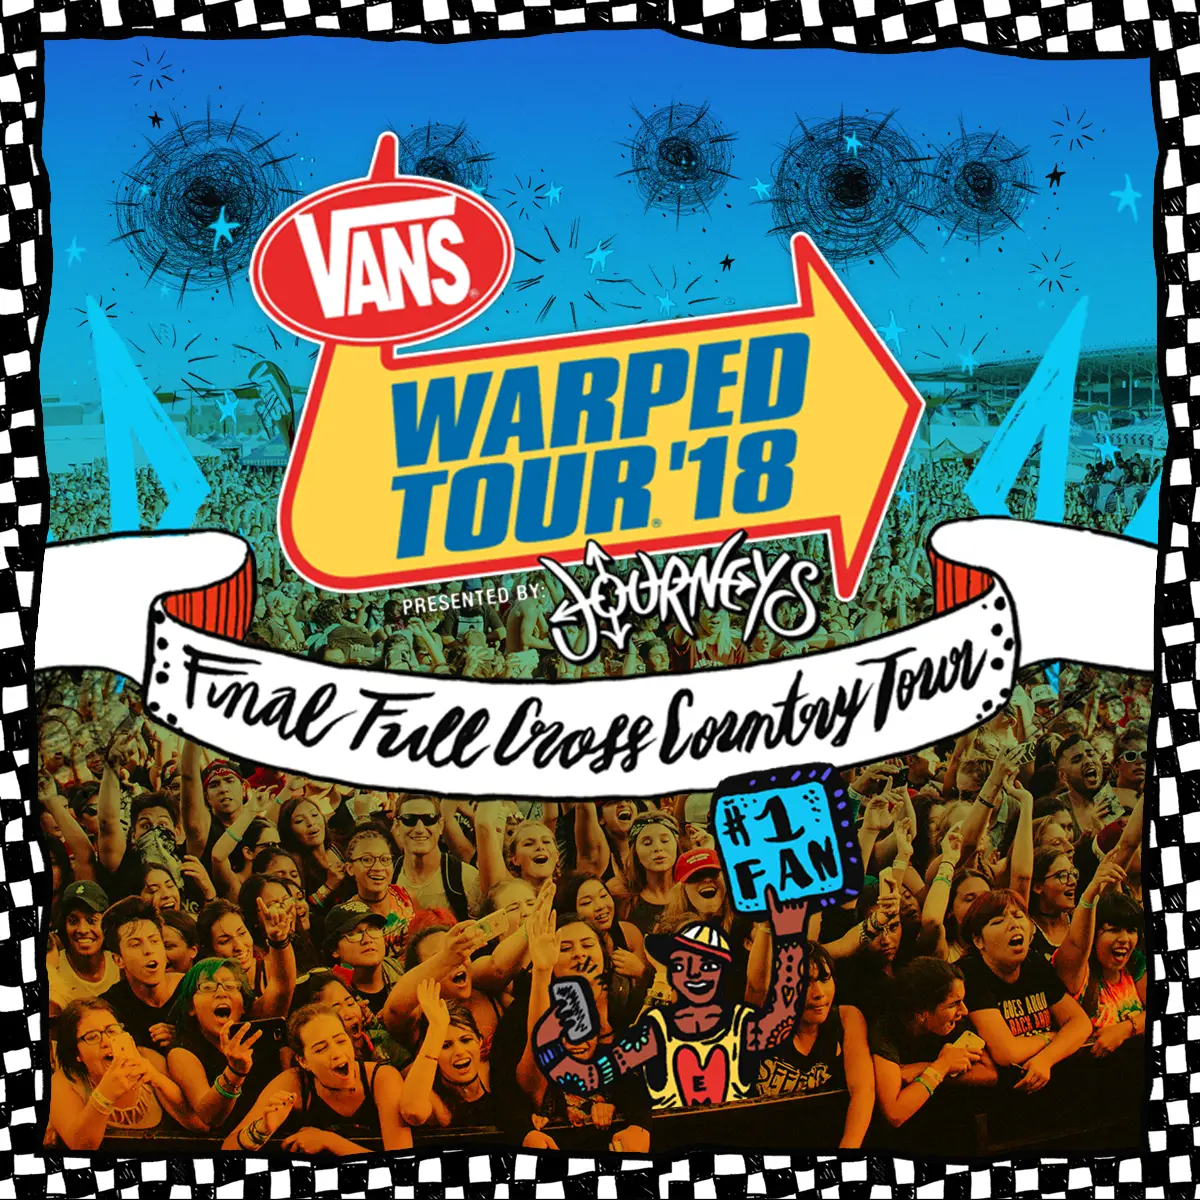 Vans Warped Tour Toronto 2018: A Review 